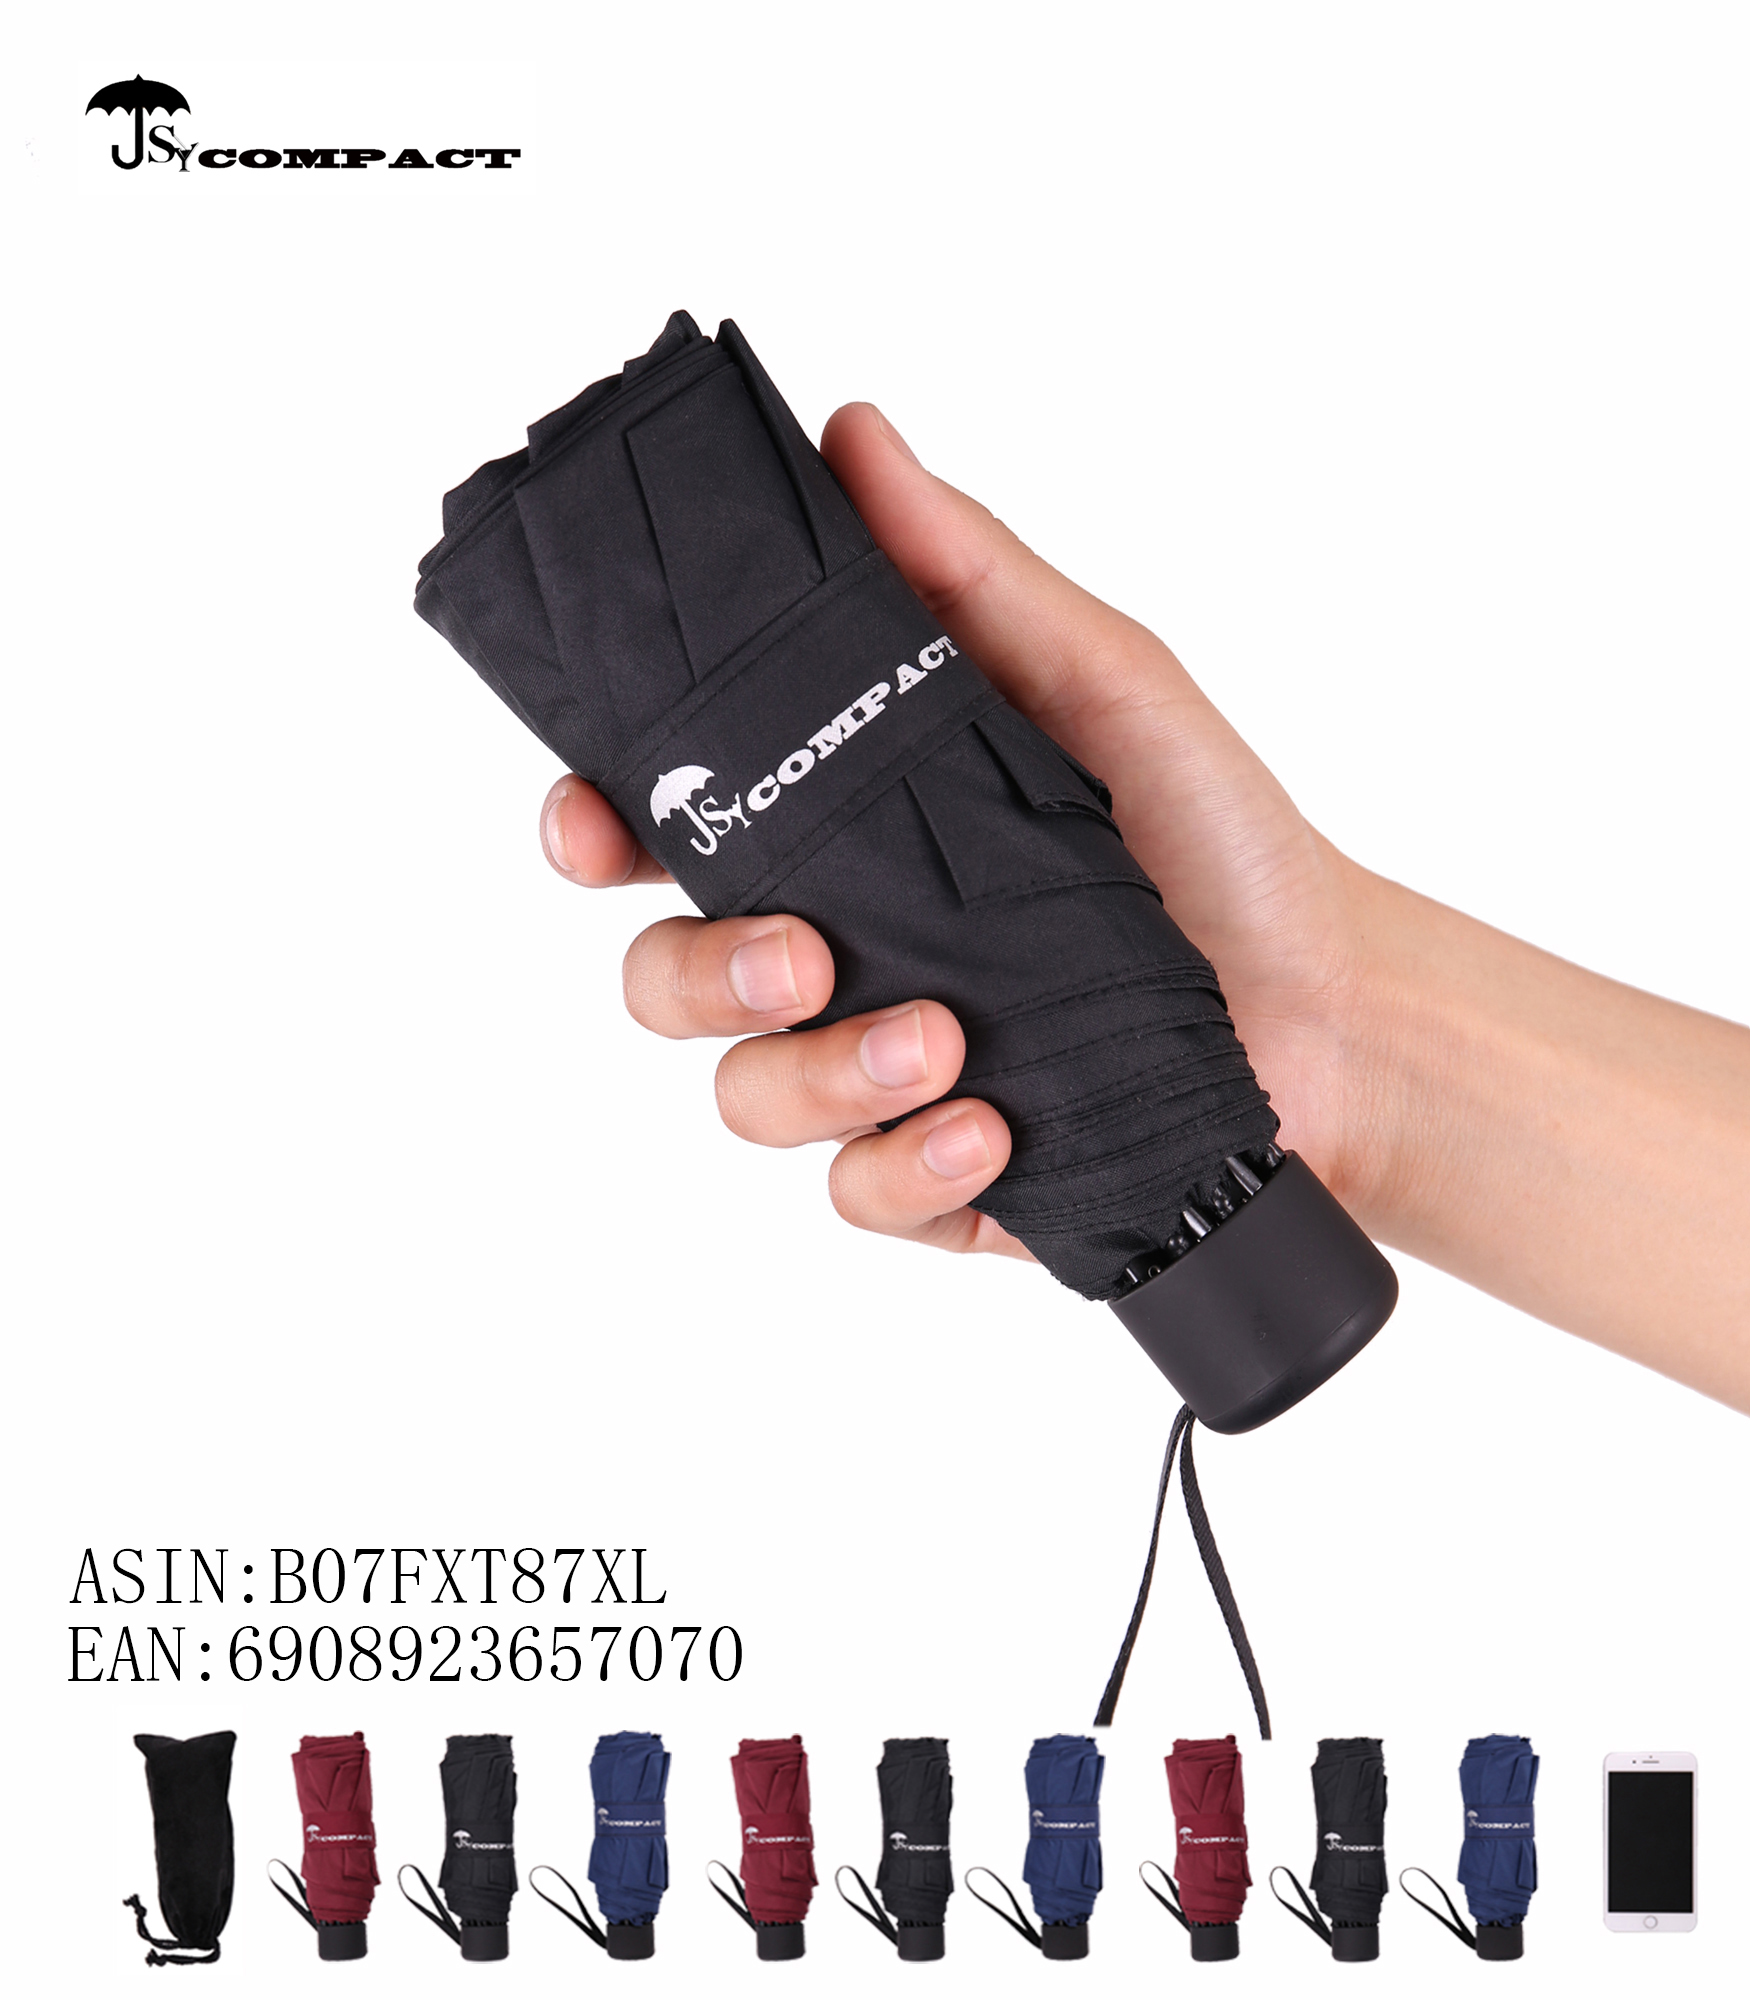 SY COMPACT Travel Umbrella - Lightweight Portable Mini Compact Umbrellas-Factory Outlet Shop